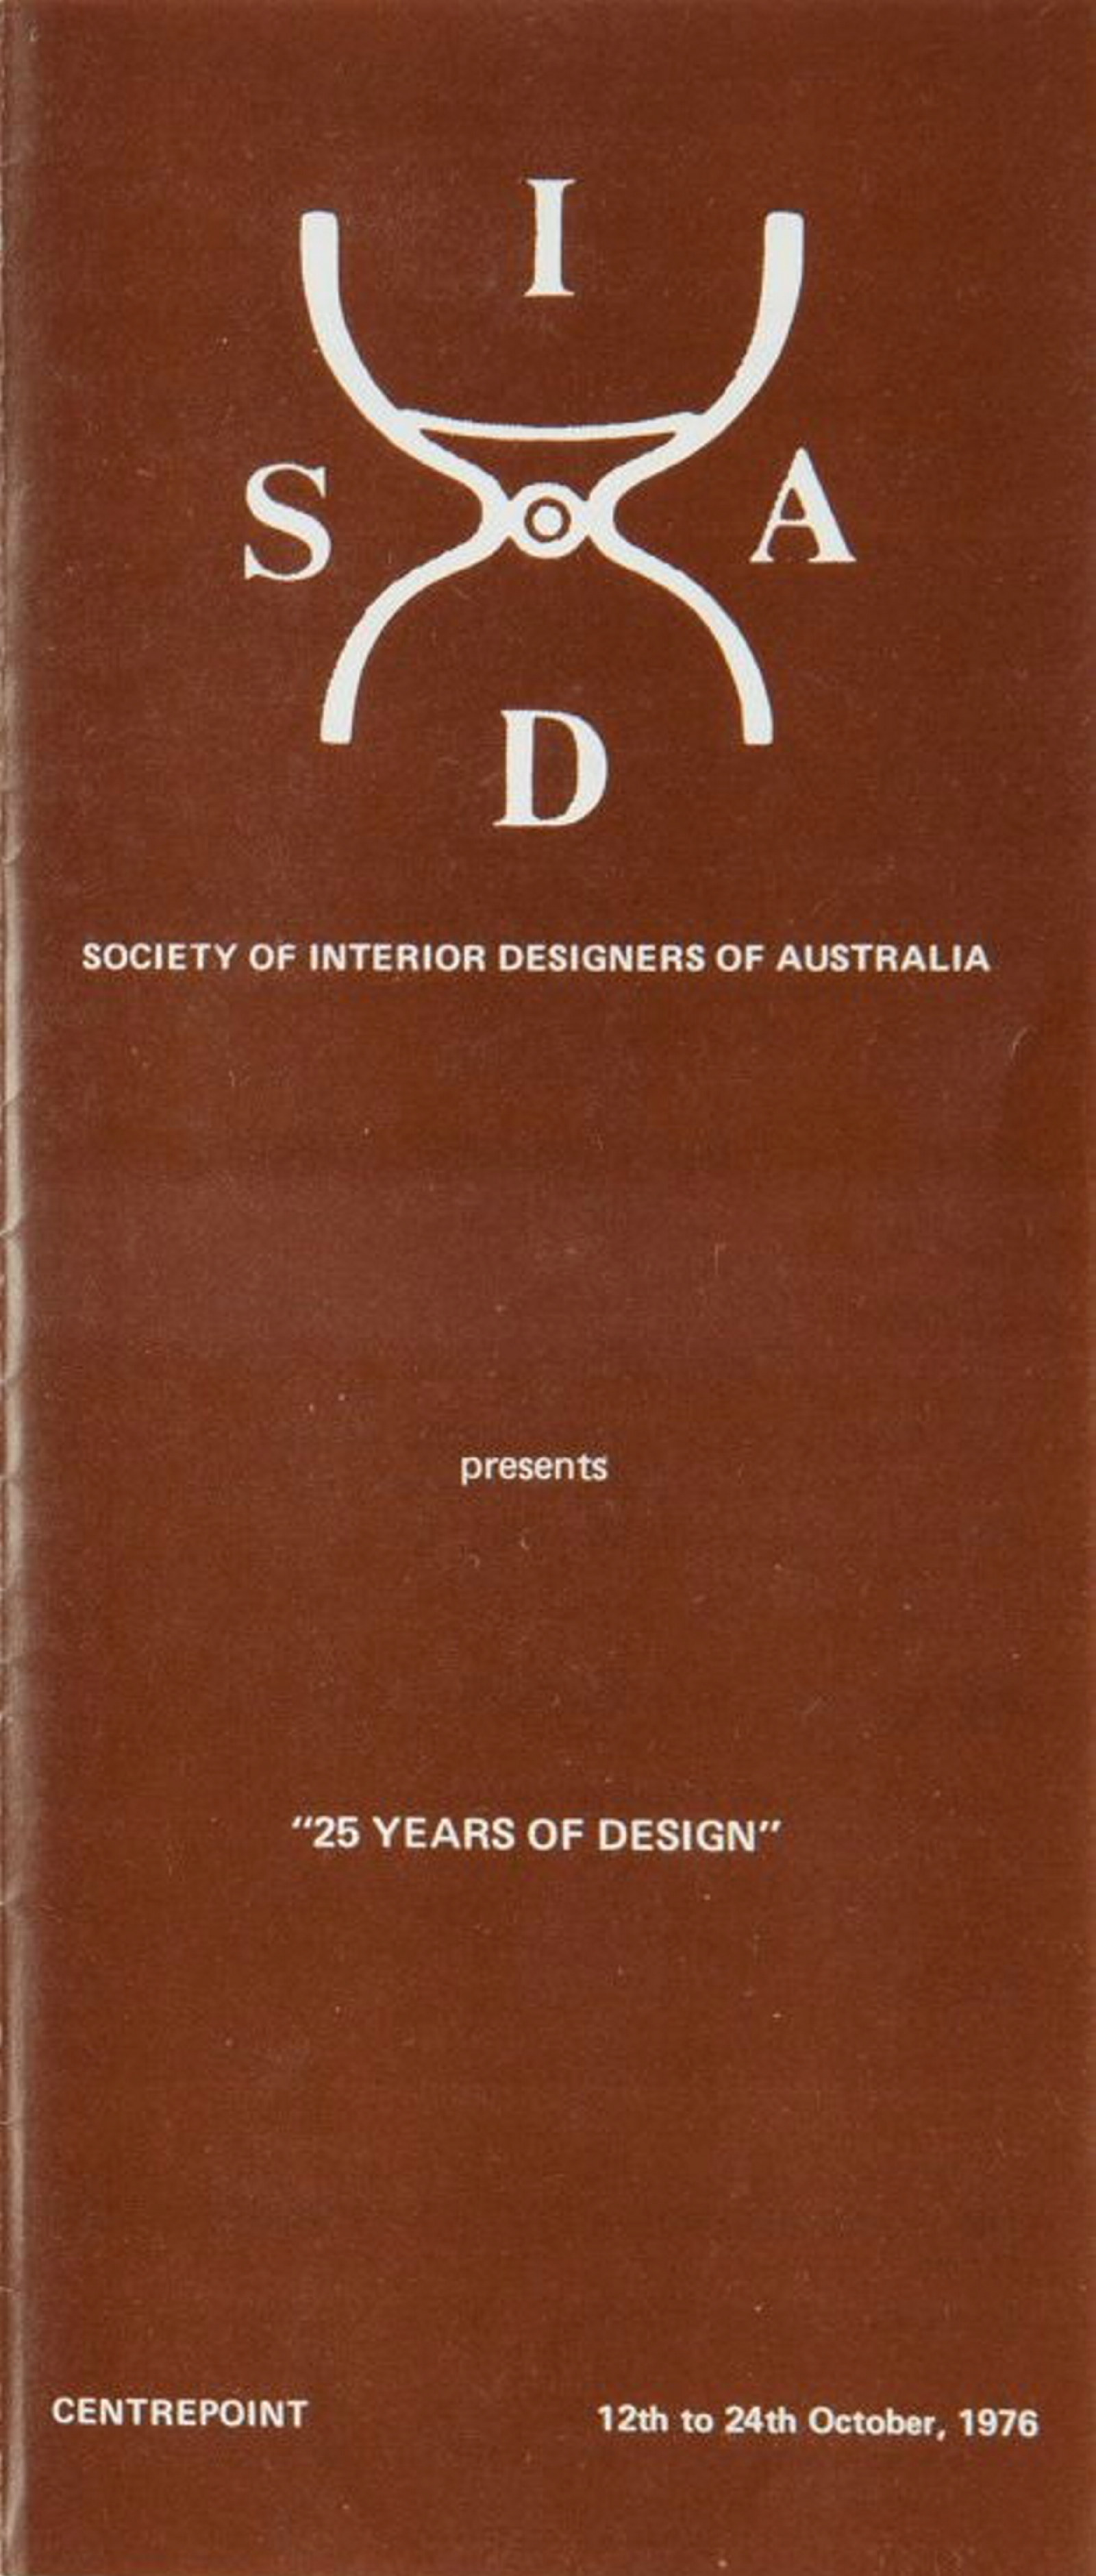 "25 years of Design", 1976